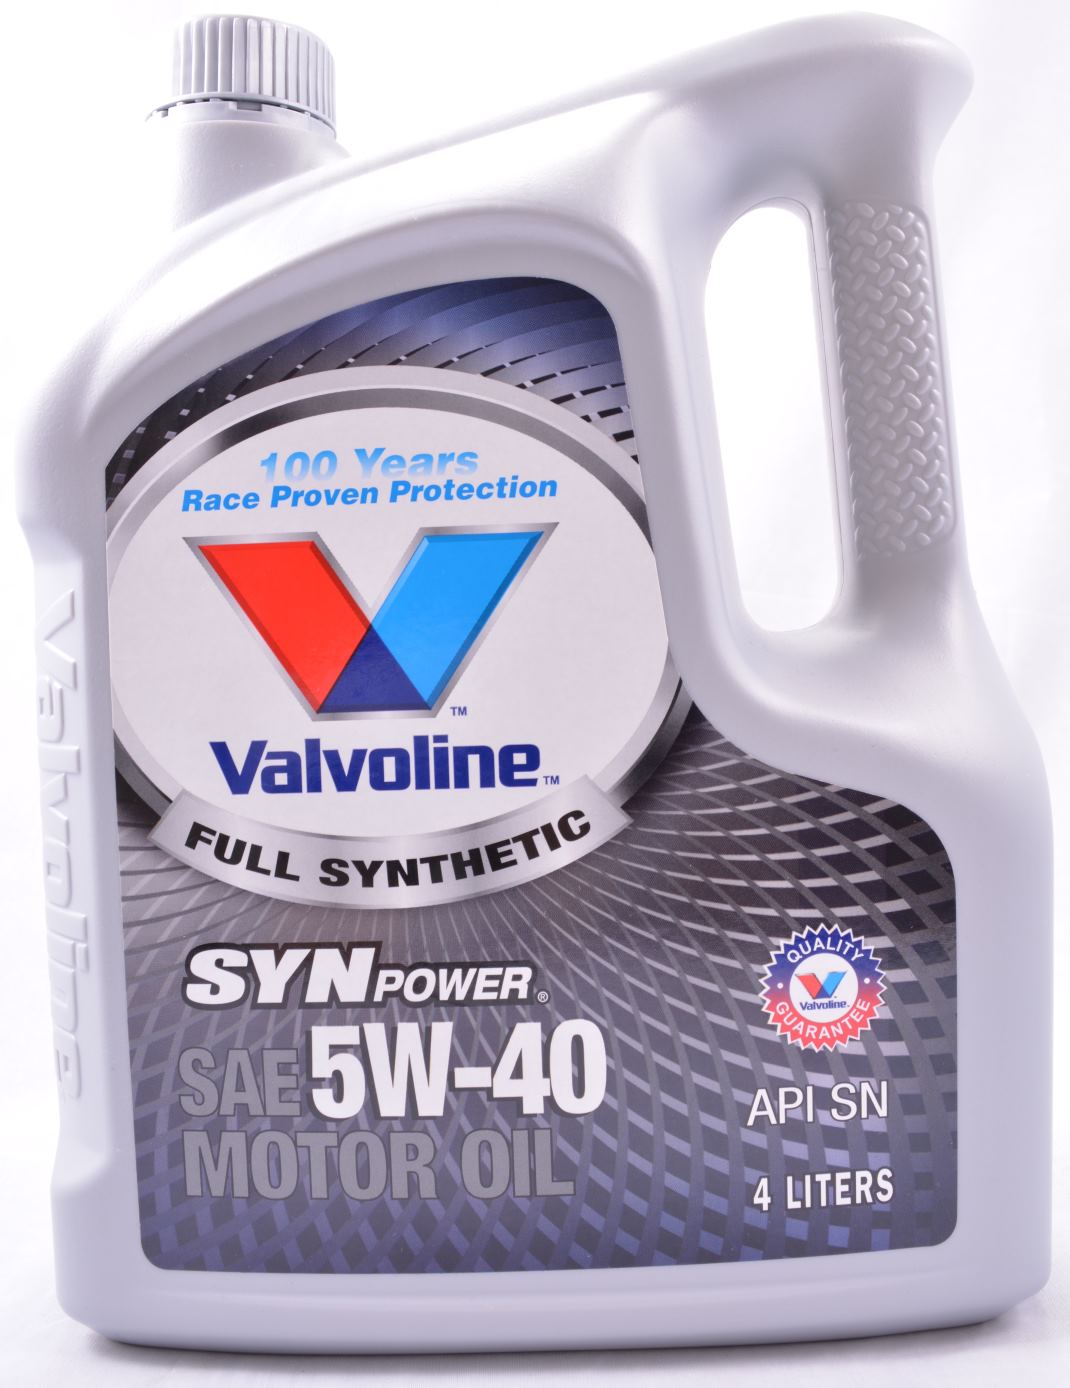 Valvoline synthetic motor oil bmw #7